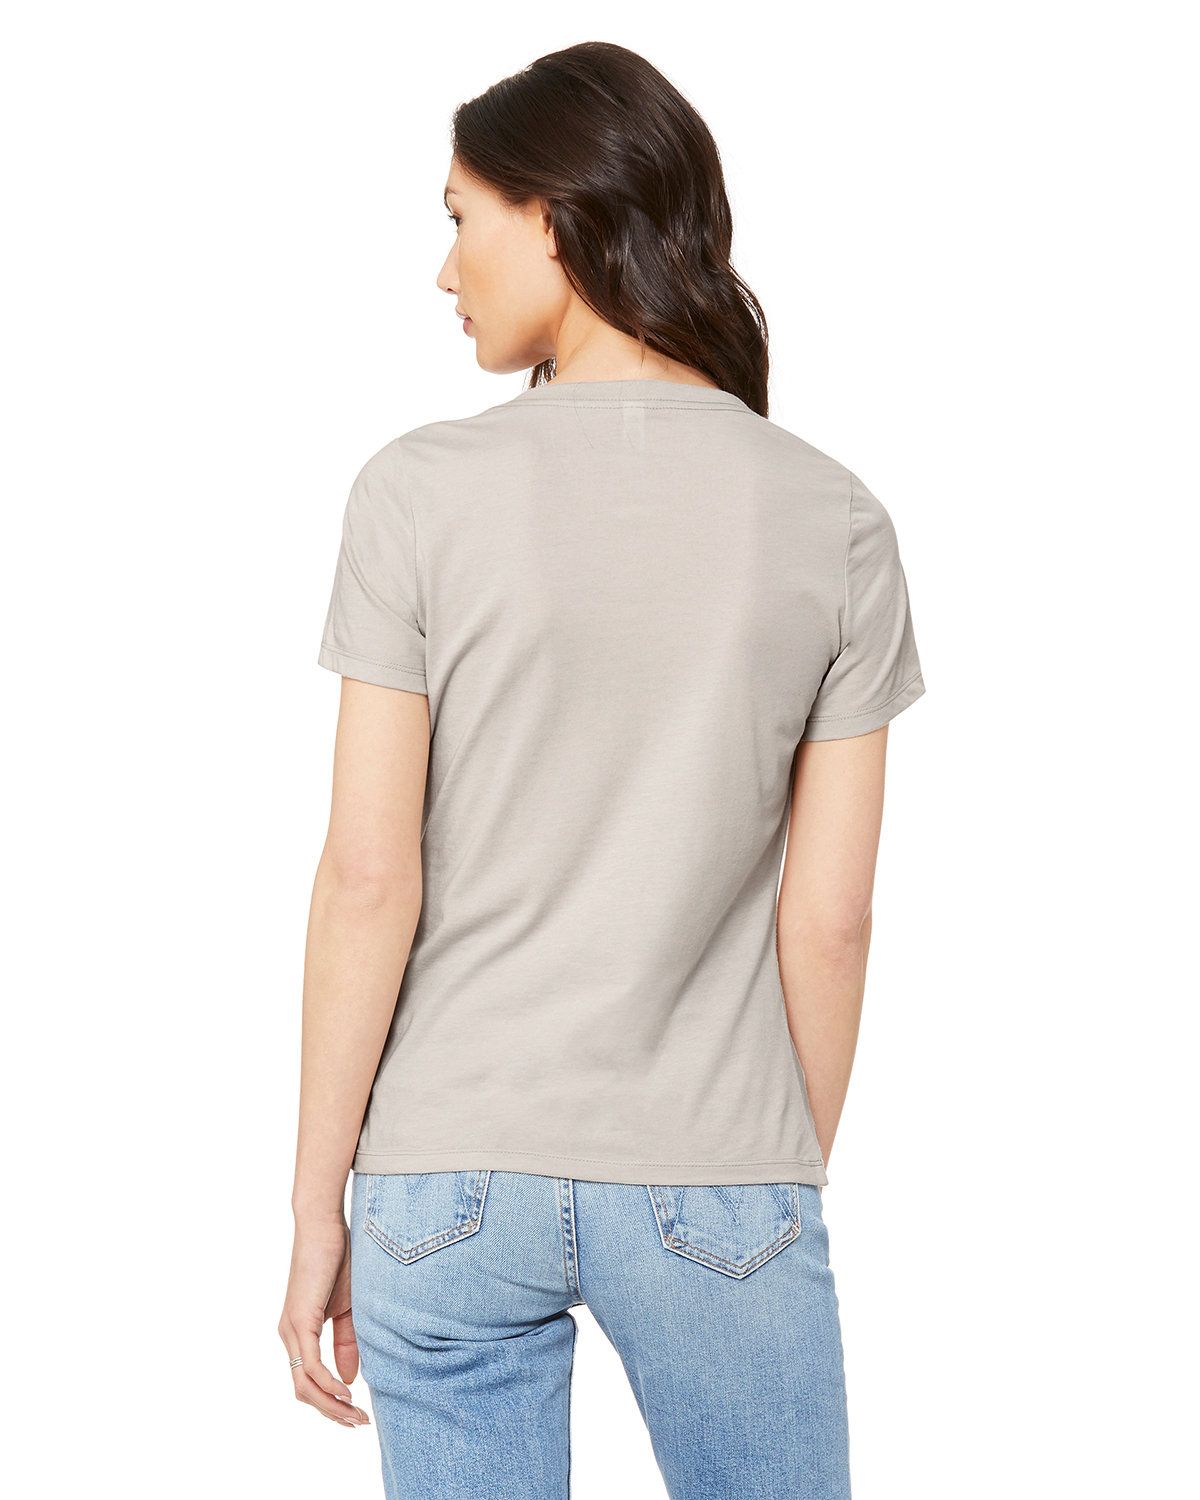 'Bella Canvas 6405CVC Ladies Relaxed Jersey V Neck T Shirt'